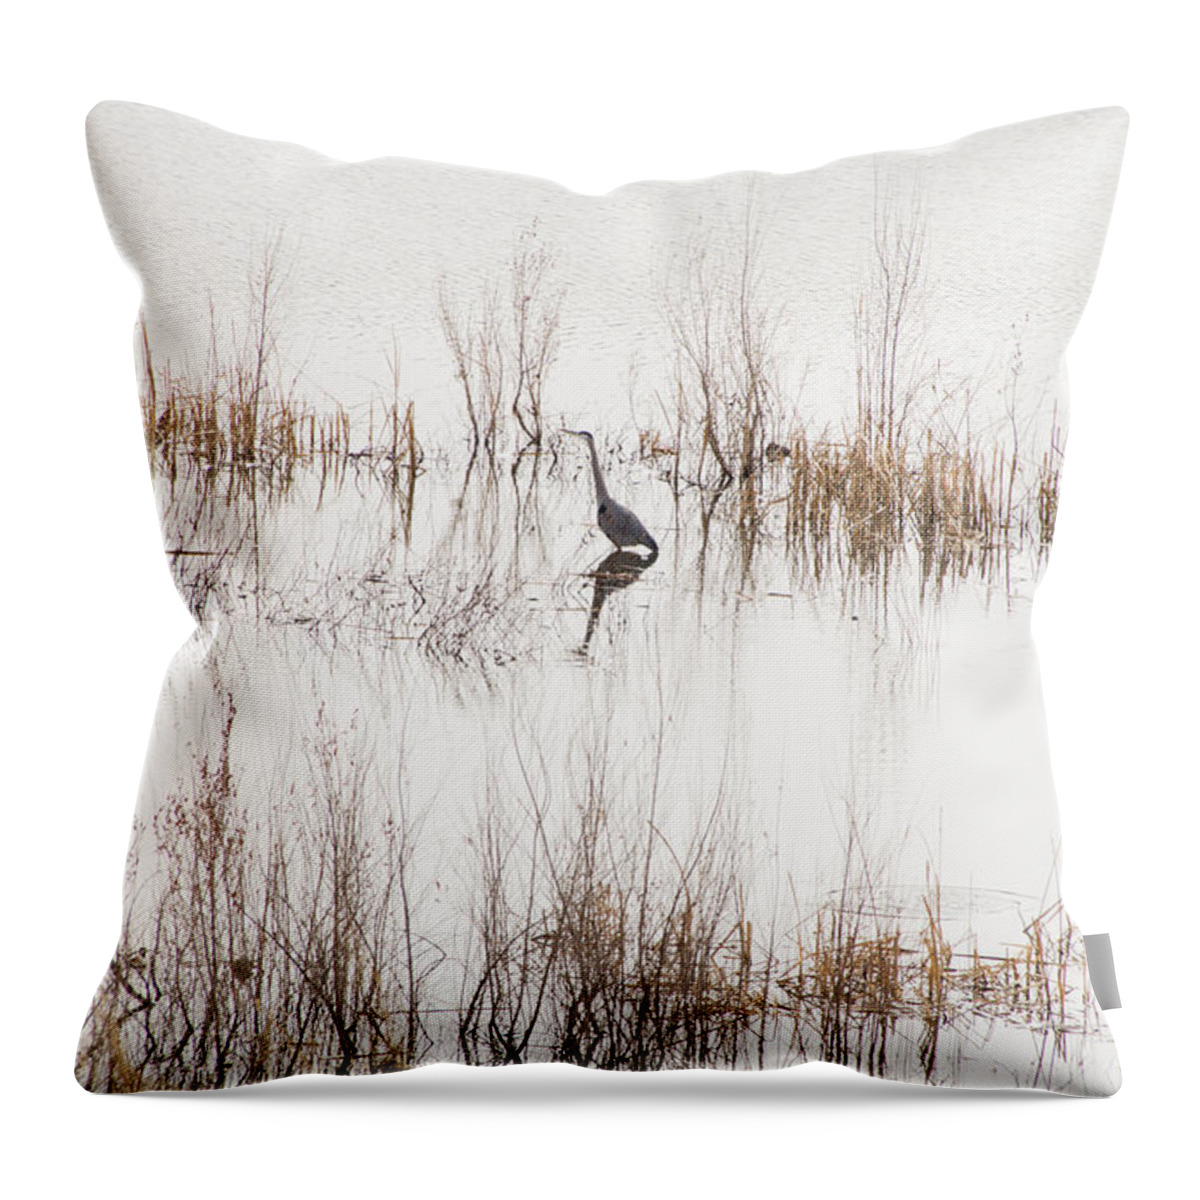 Crane Throw Pillow featuring the photograph Crane in Reeds by Laura Pratt